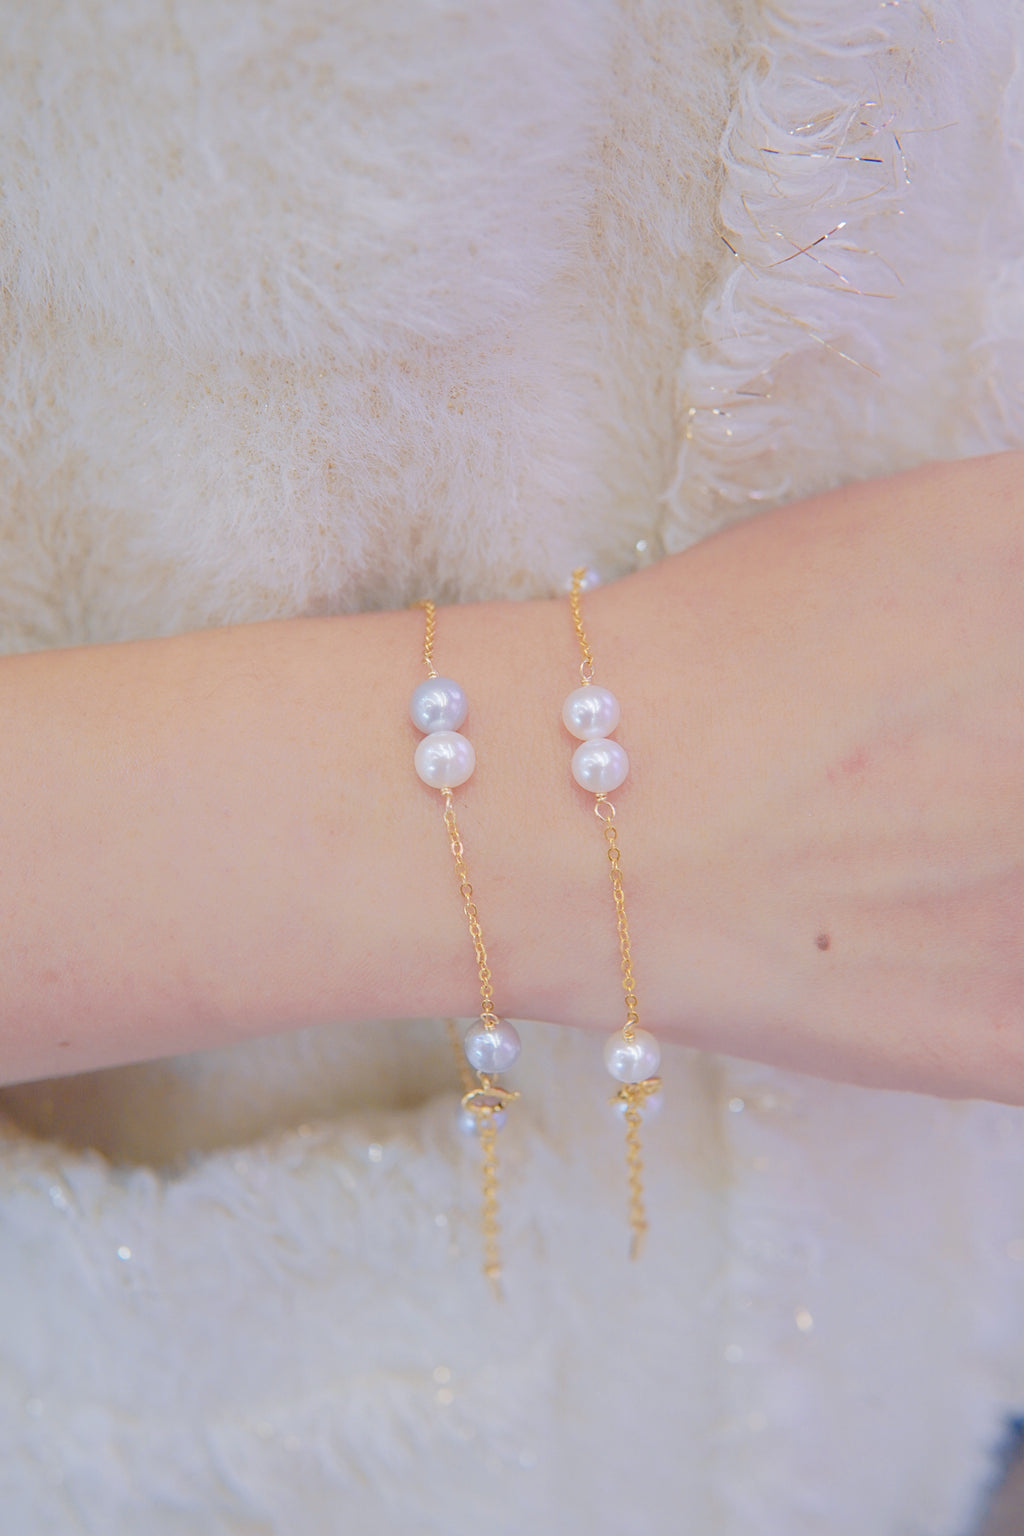 LAFIT · Snowy Winter - Bracelet 簡約法式氣質珍珠手鍊